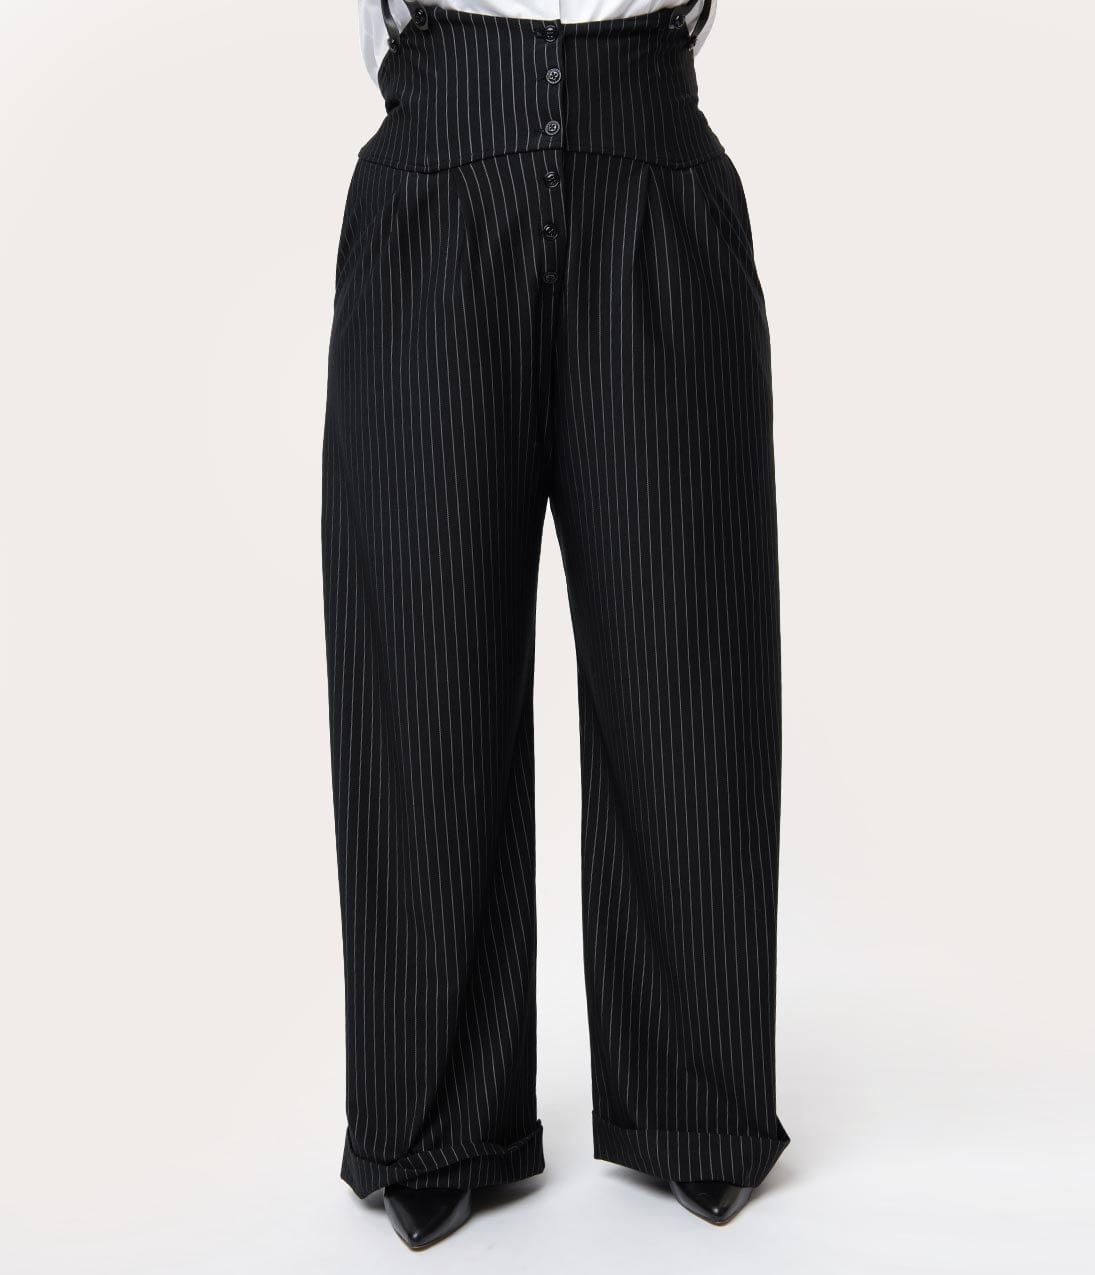 Unique Vintage Plus Size 1930s Black & White Pin Stripe Thelma Suspend